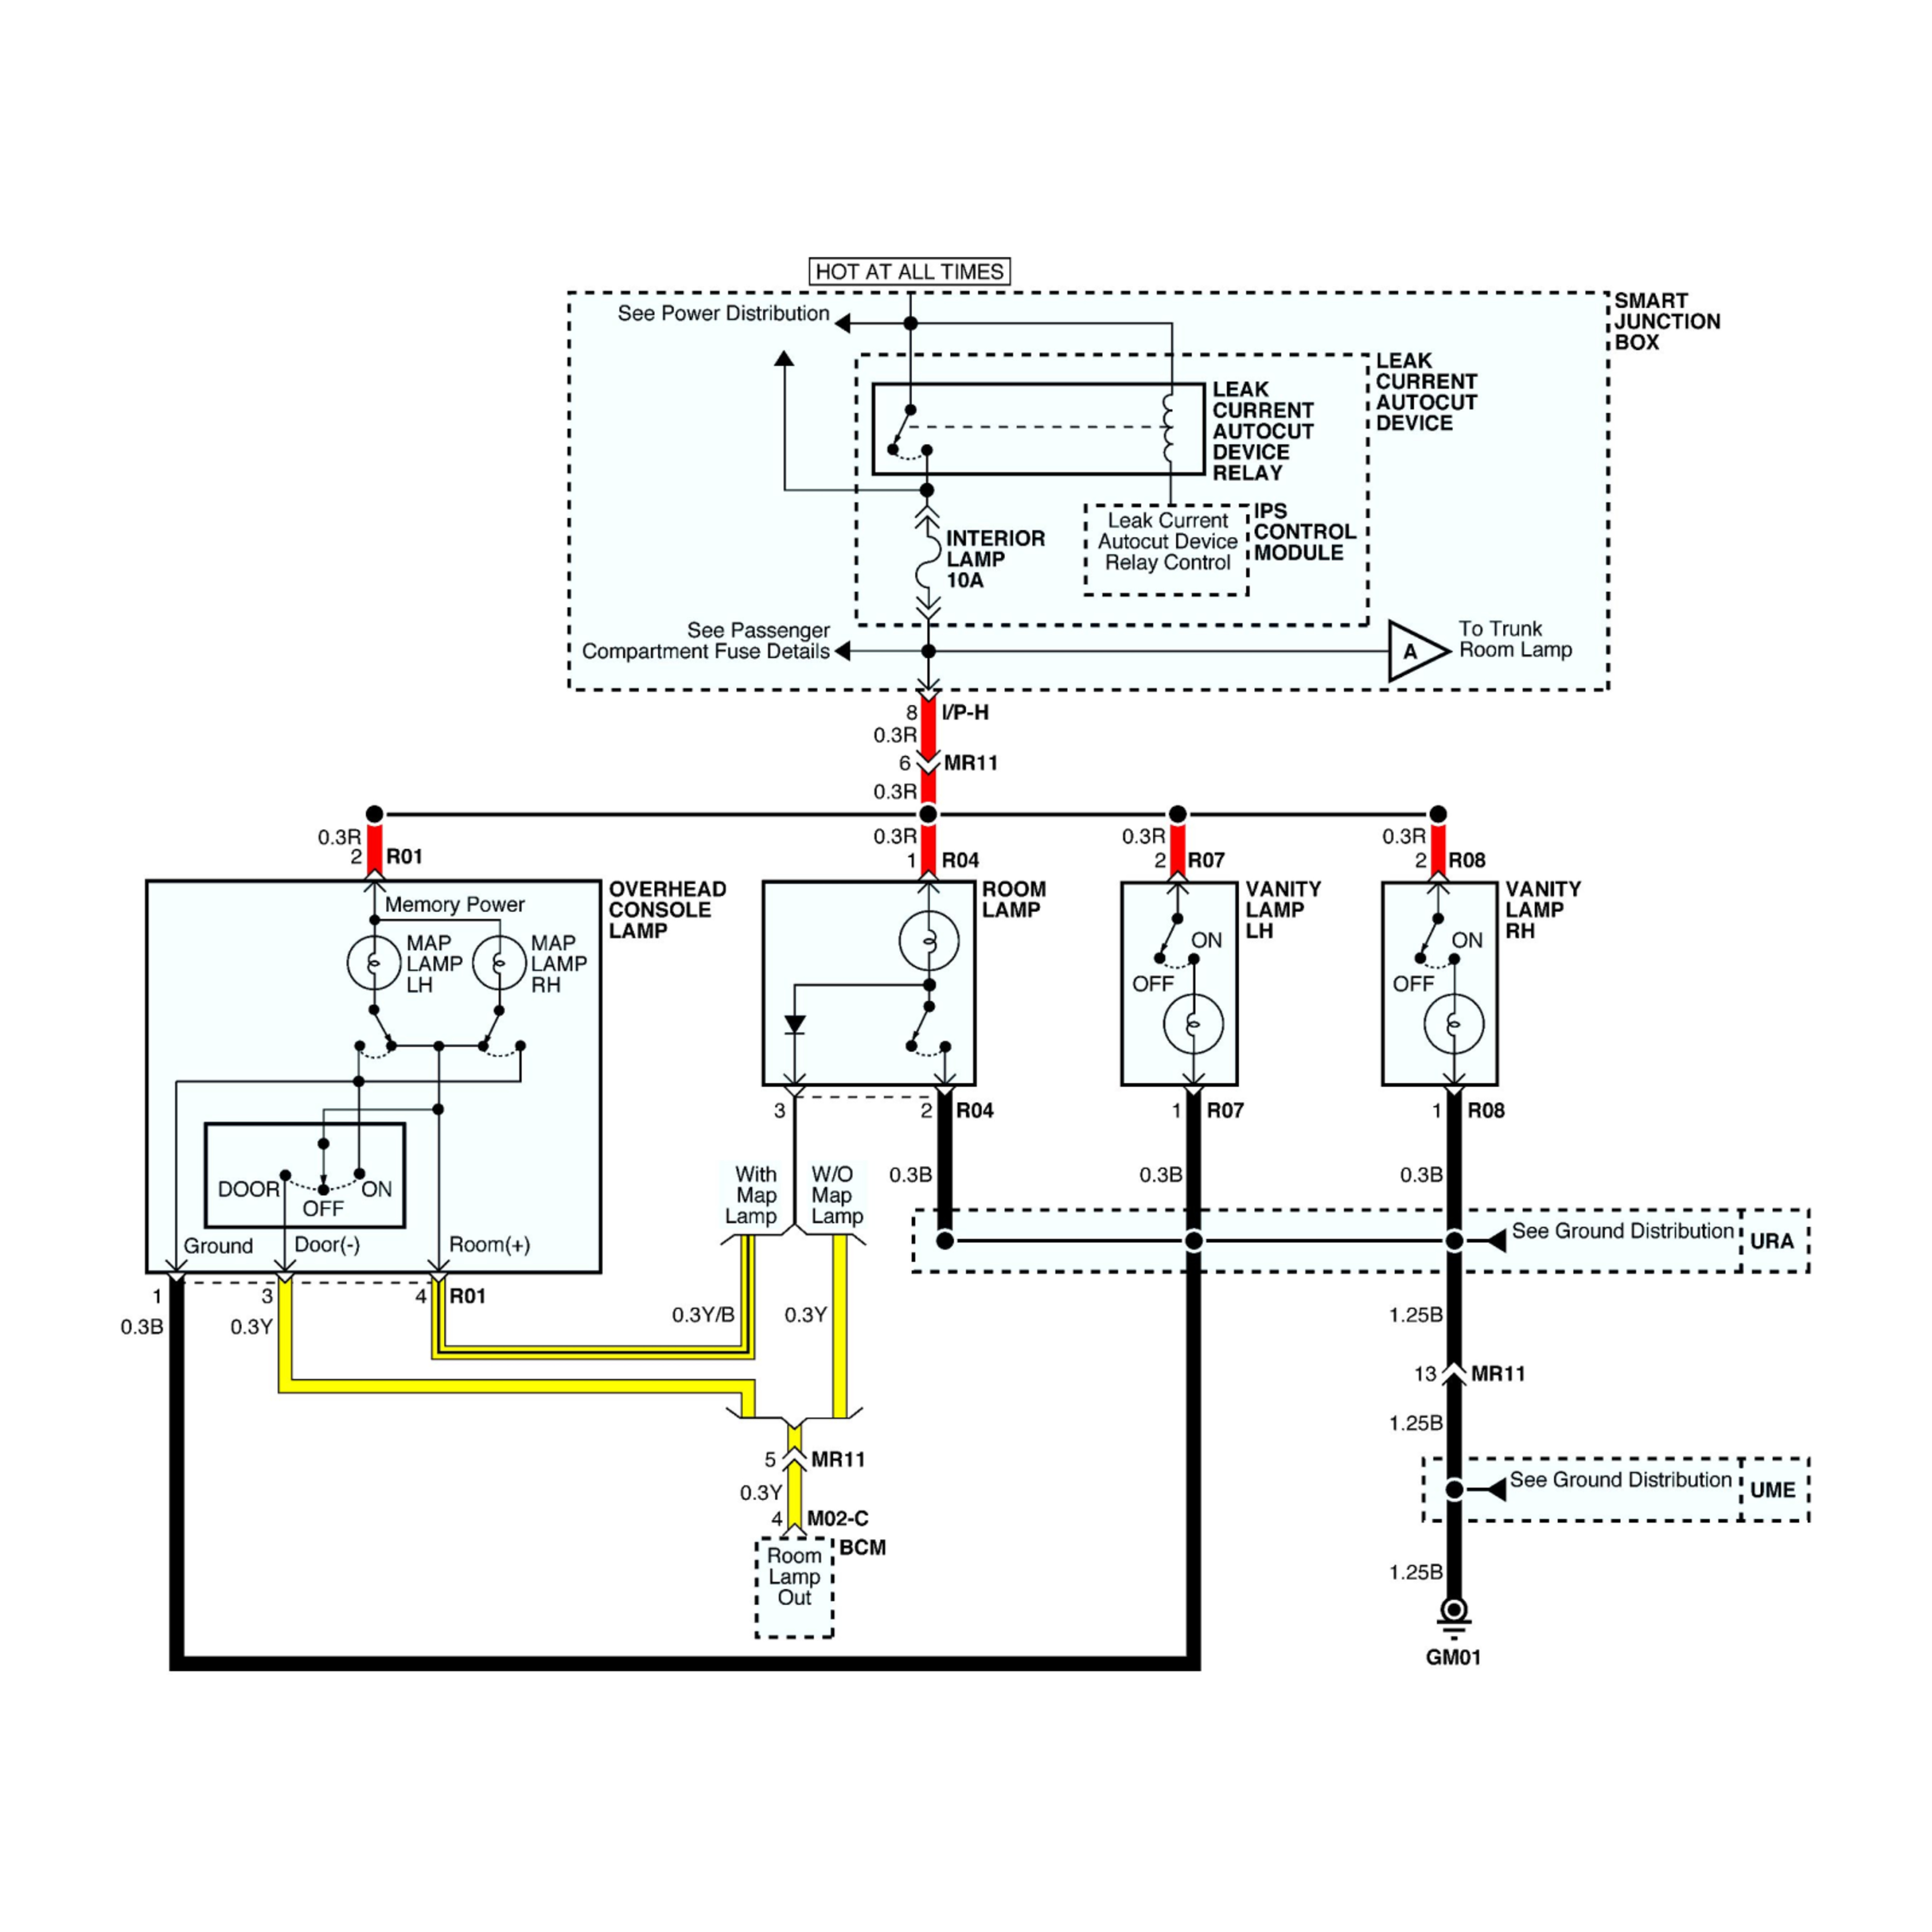 2009 Chevrolet Trailblazer wiring diagrams example